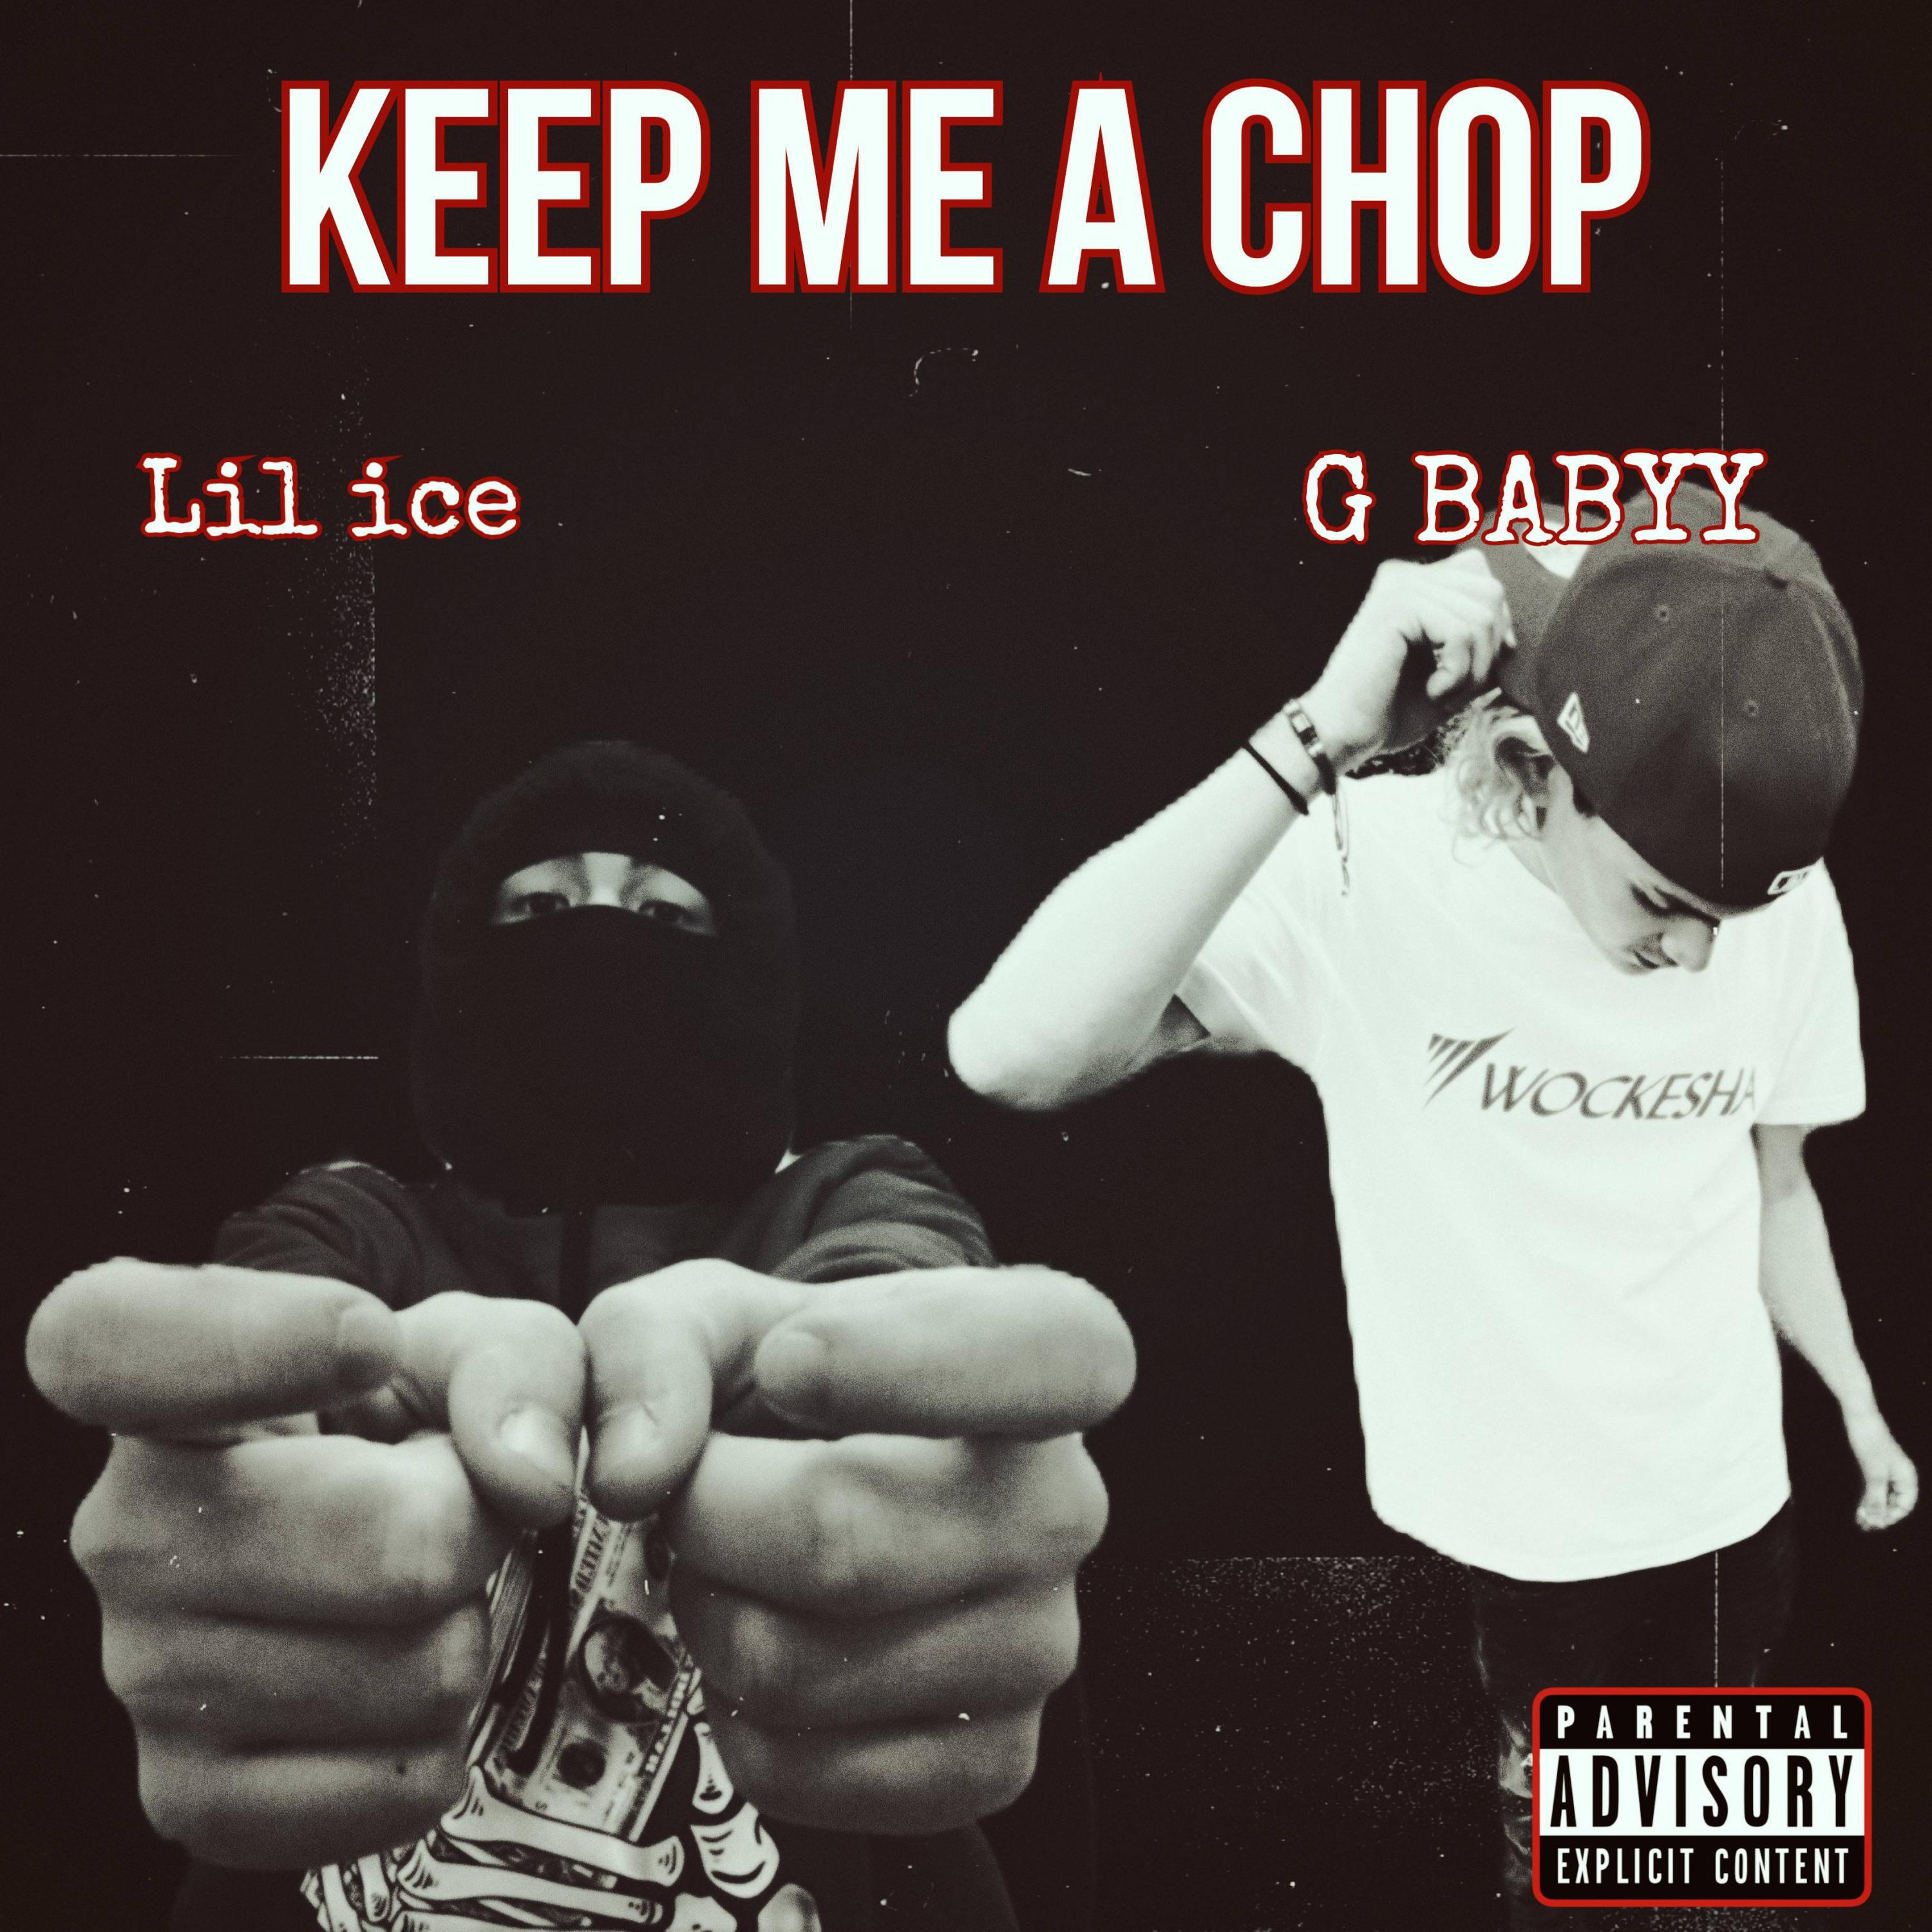 G babyy - Keep Me A Chop (feat. LiL ice)